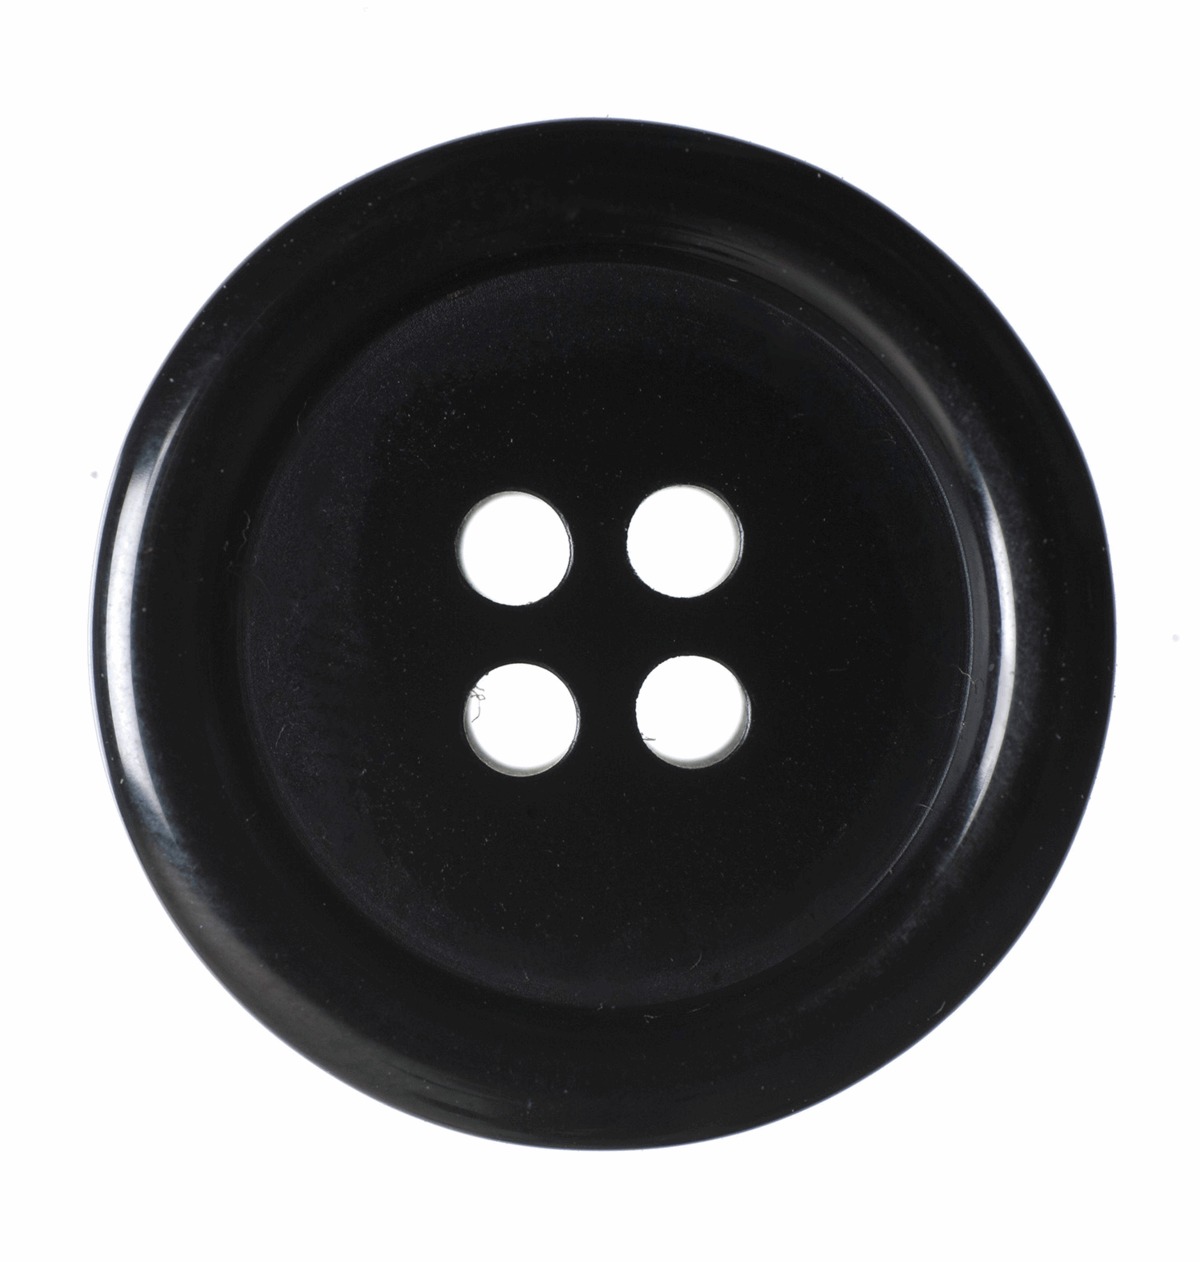 Hemline 4-Hole Black Button - 20mm (Pack of 6)